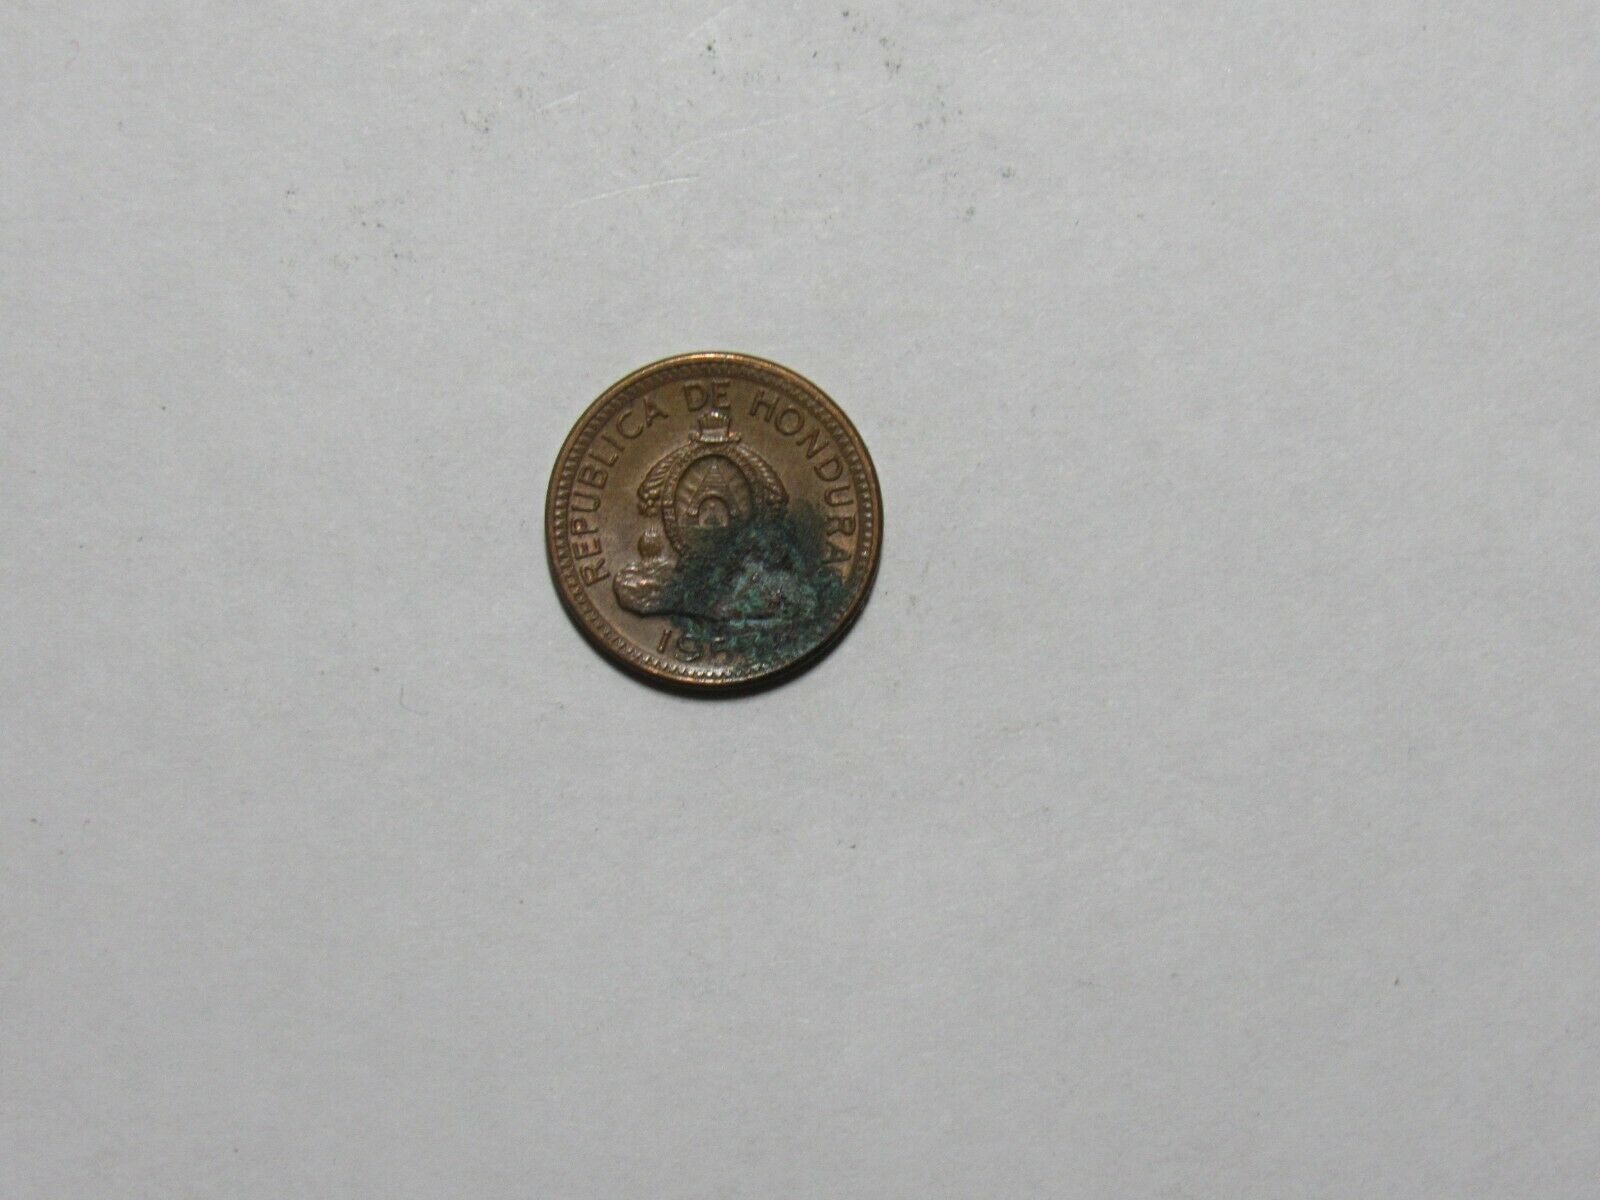 Old Honduras Coin - 1957 1 Centavo - Circulated, Corroded